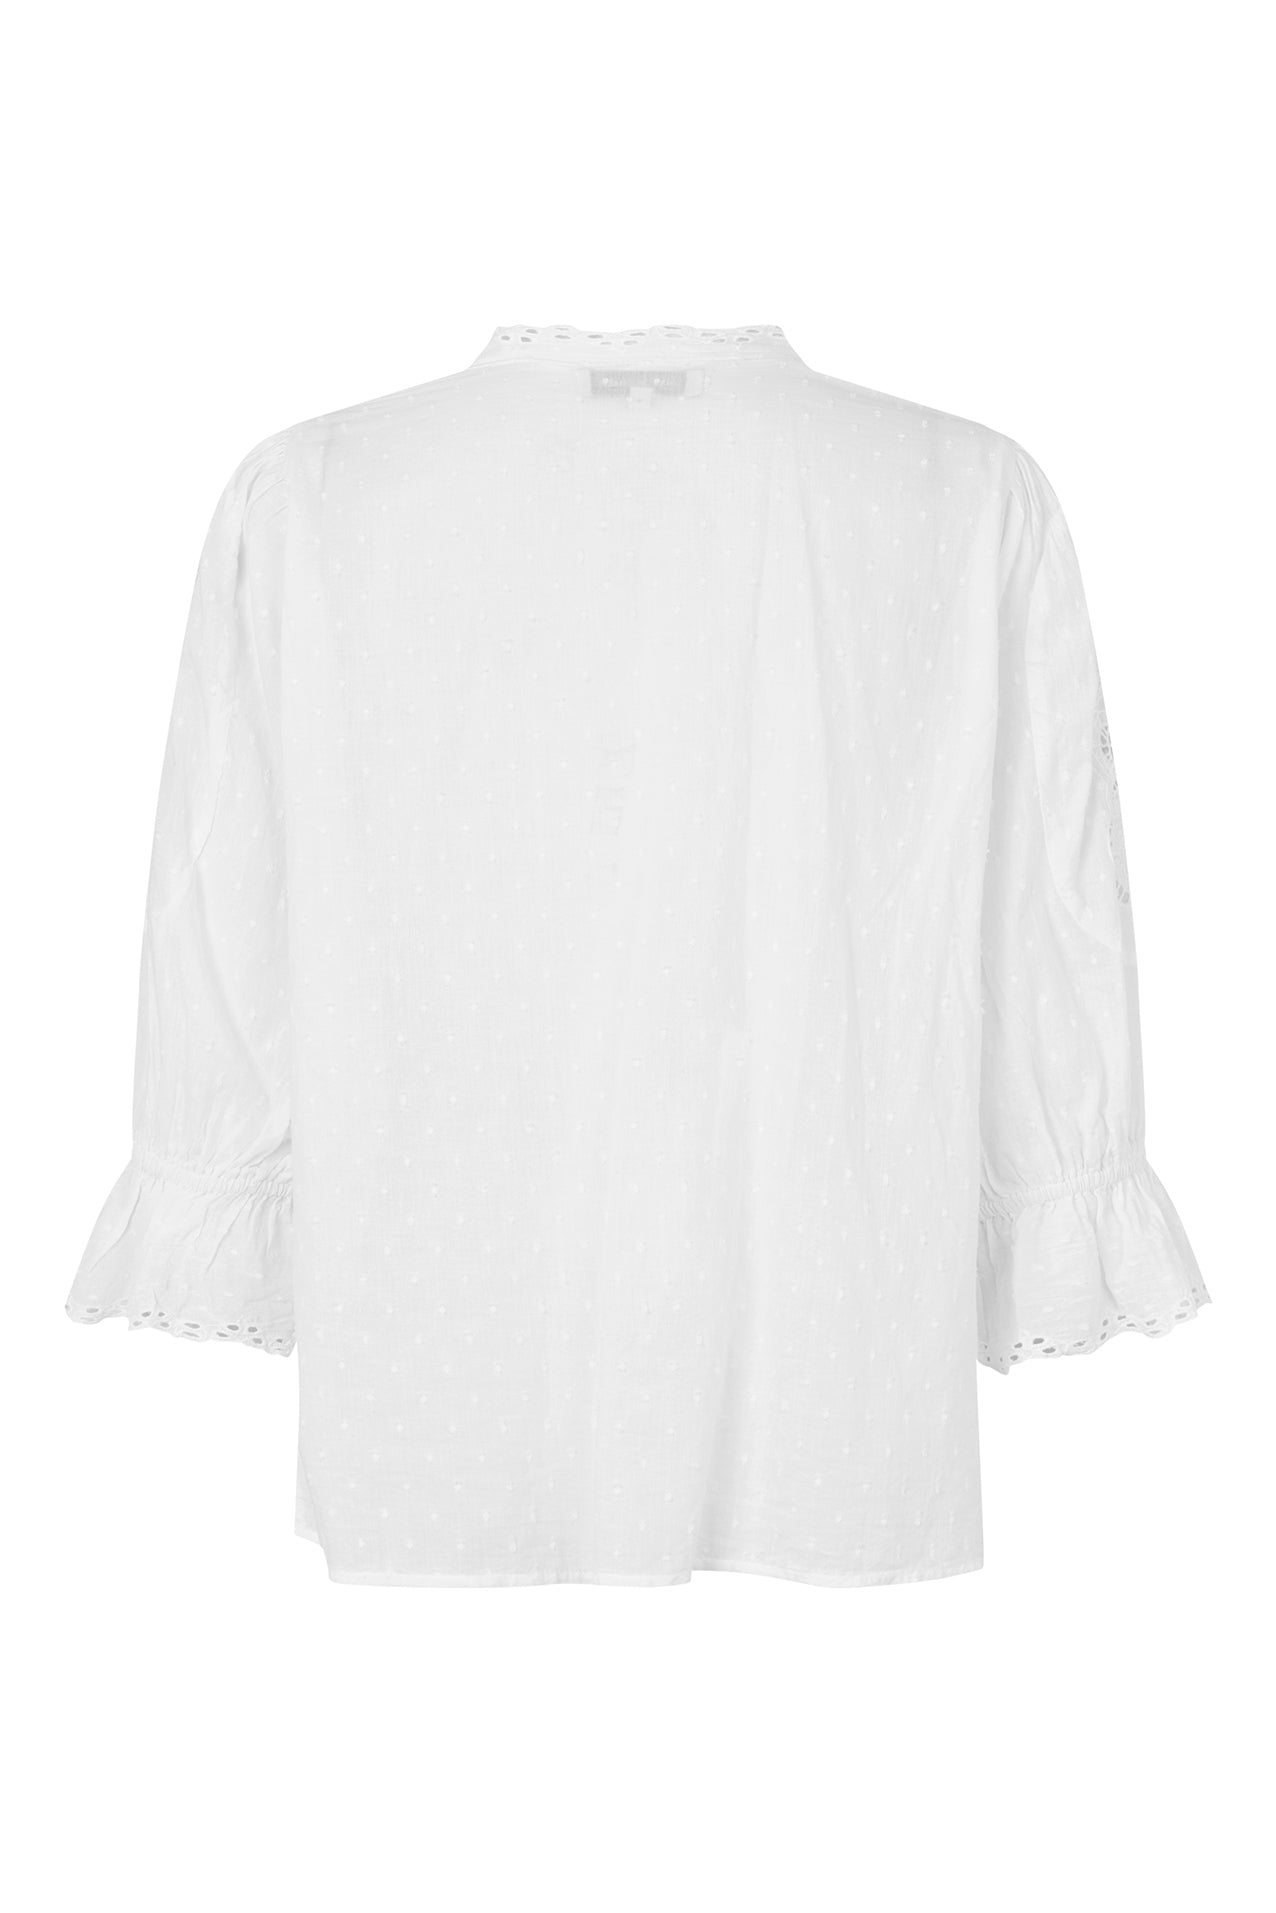 Lollys Laundry CharlieLL Shirt Shirt Hvid